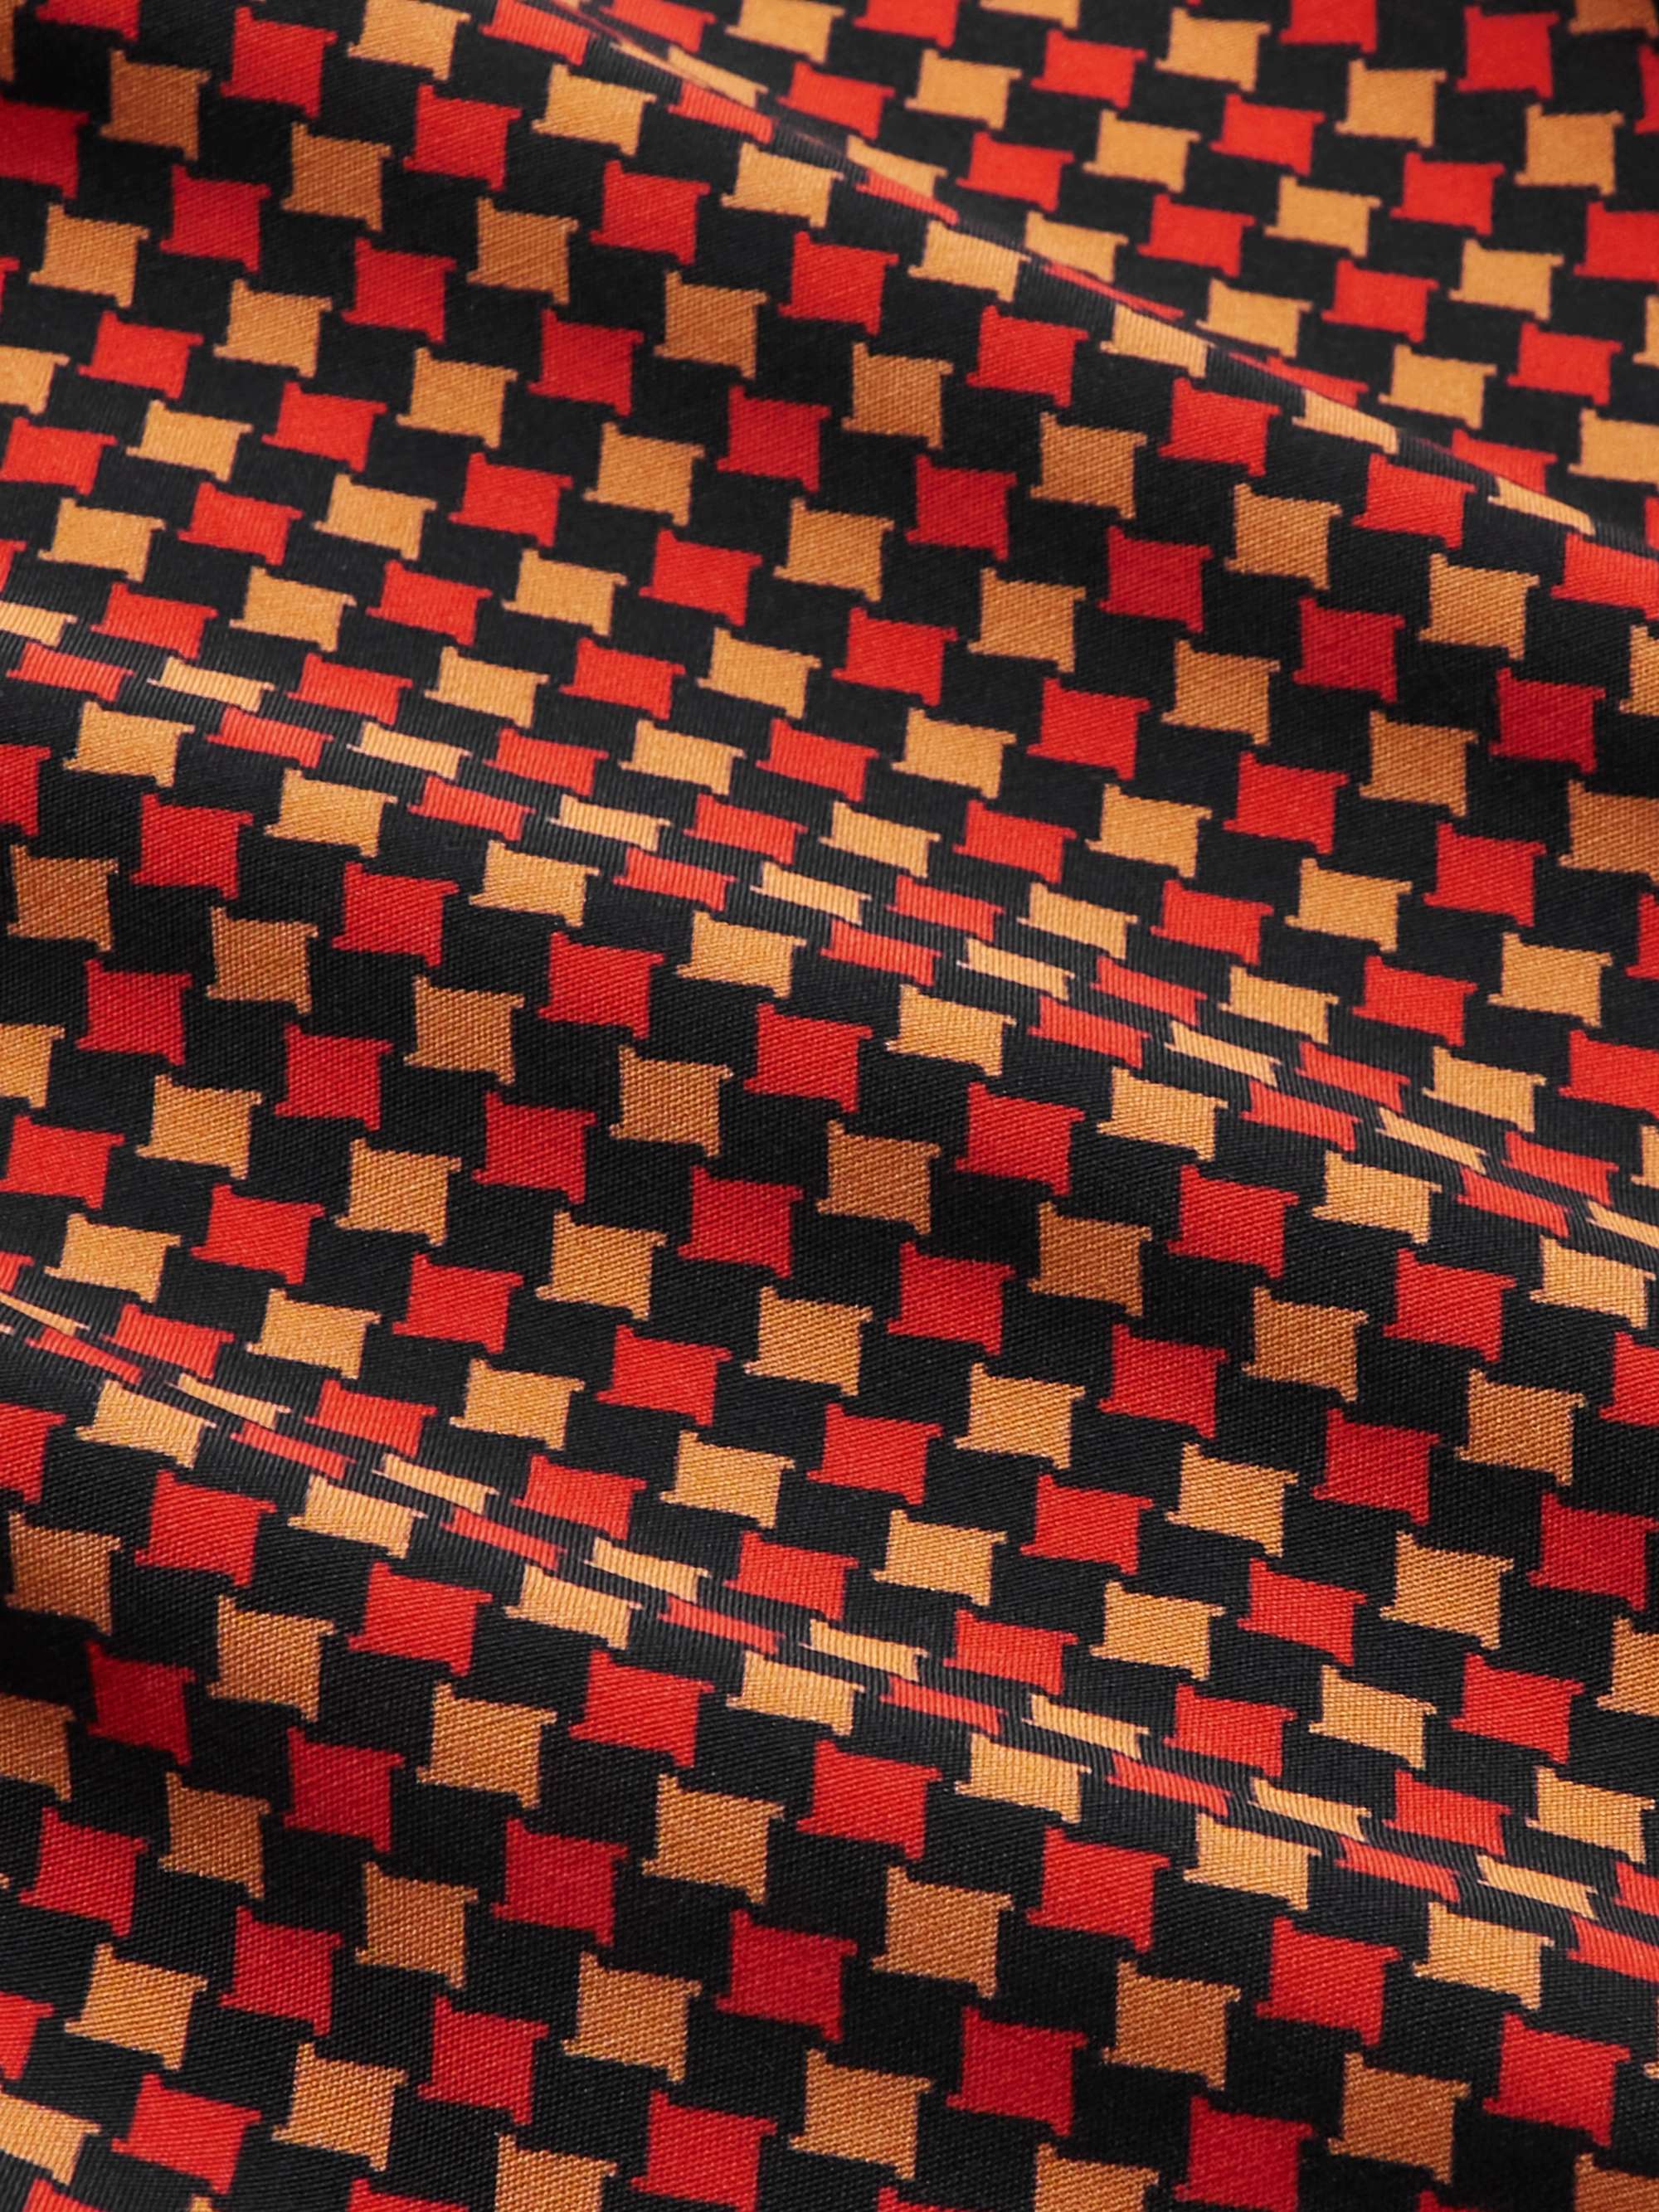 GUCCI Camp-Collar Printed Striped Silk Shirt